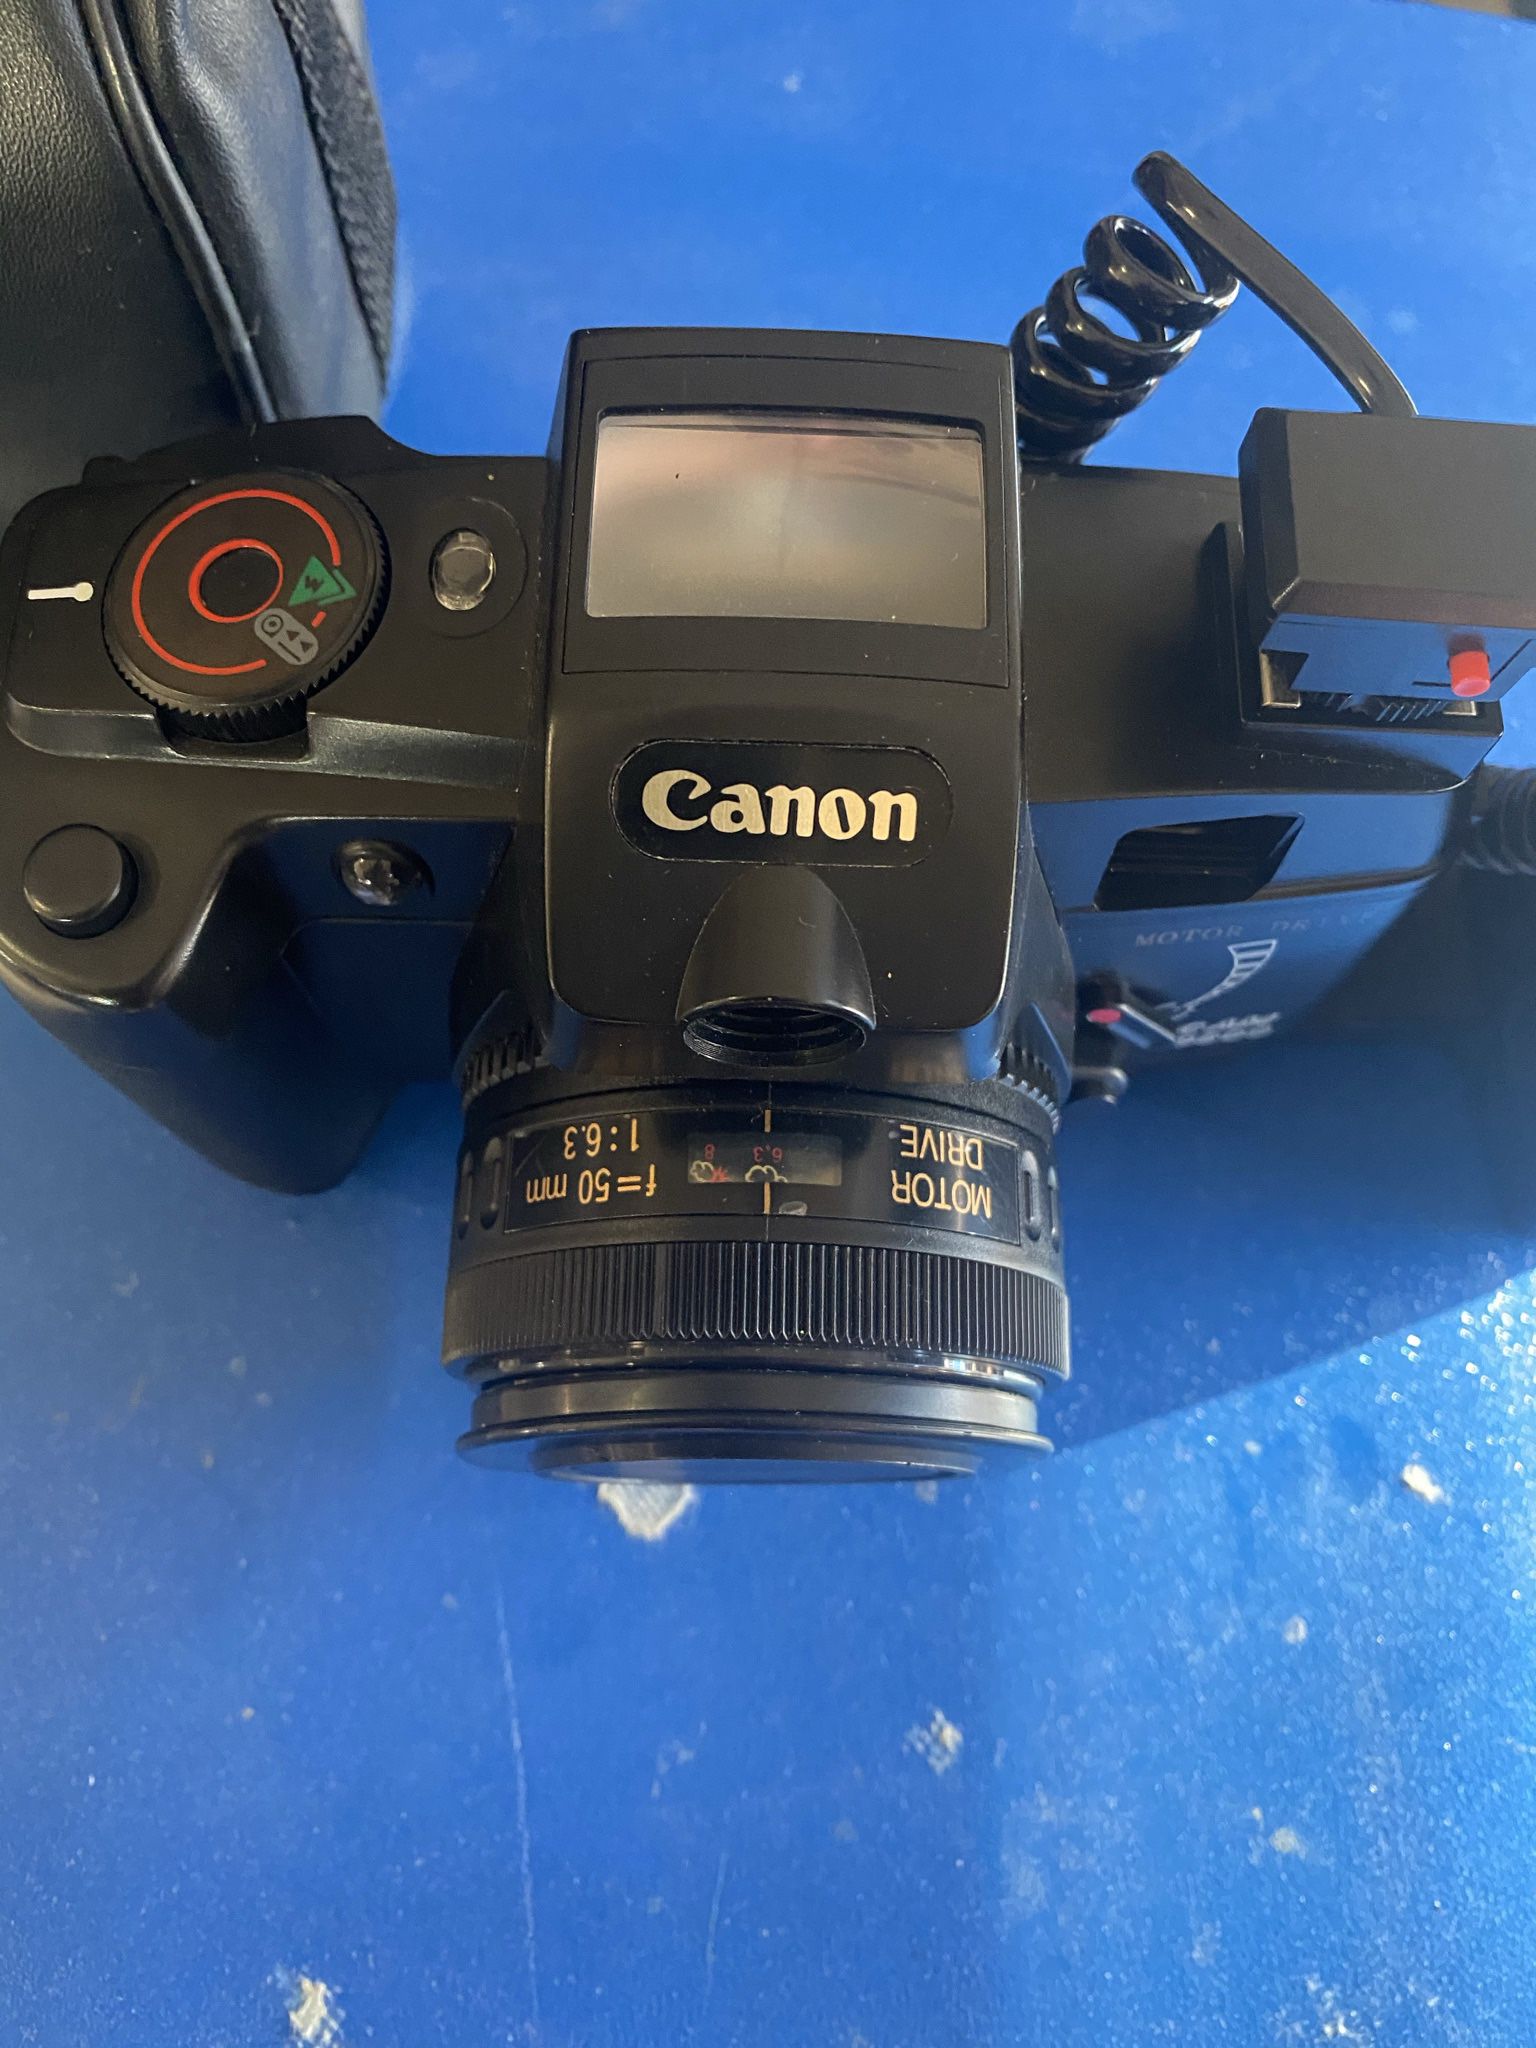 Photovision Camera Model Cam 9600 Autofocus w/ Flash and Bag